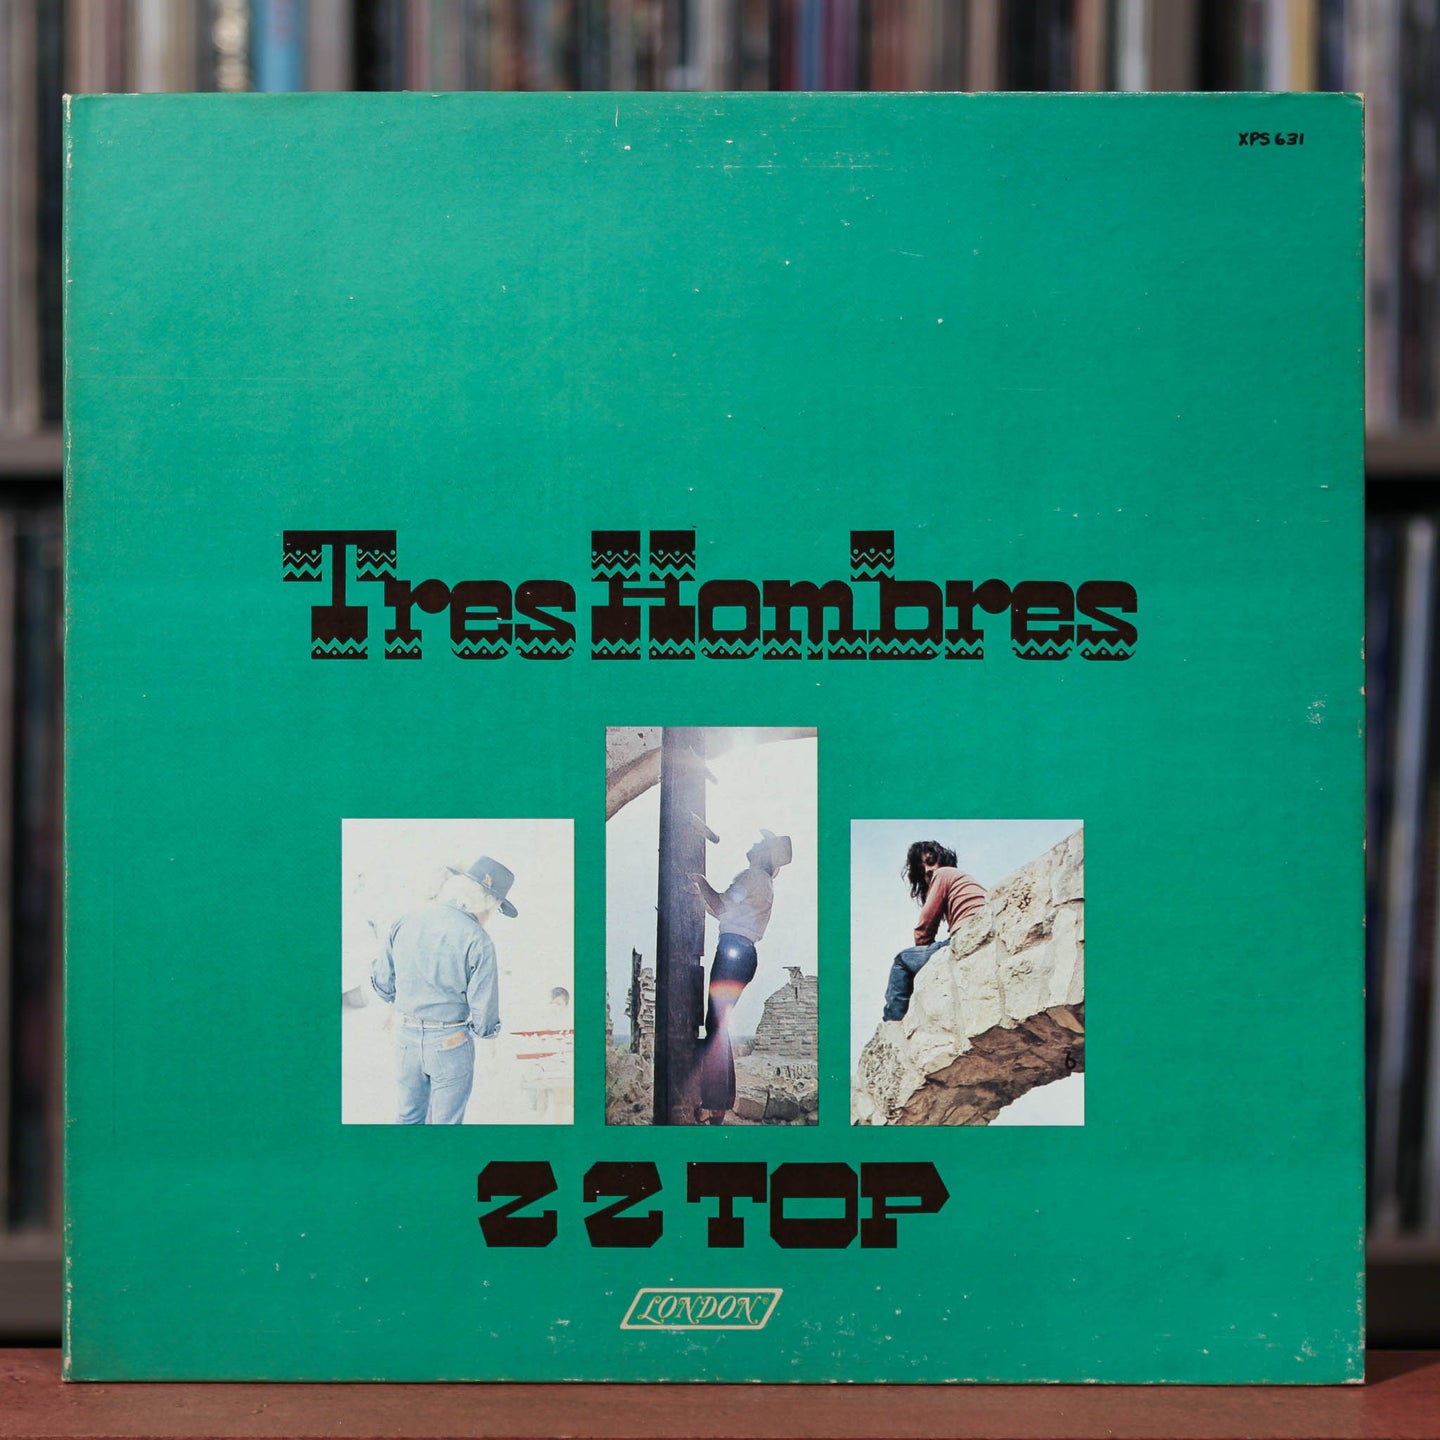 ZZ Top - Tres Hombres - 1973 London. VG+/EX